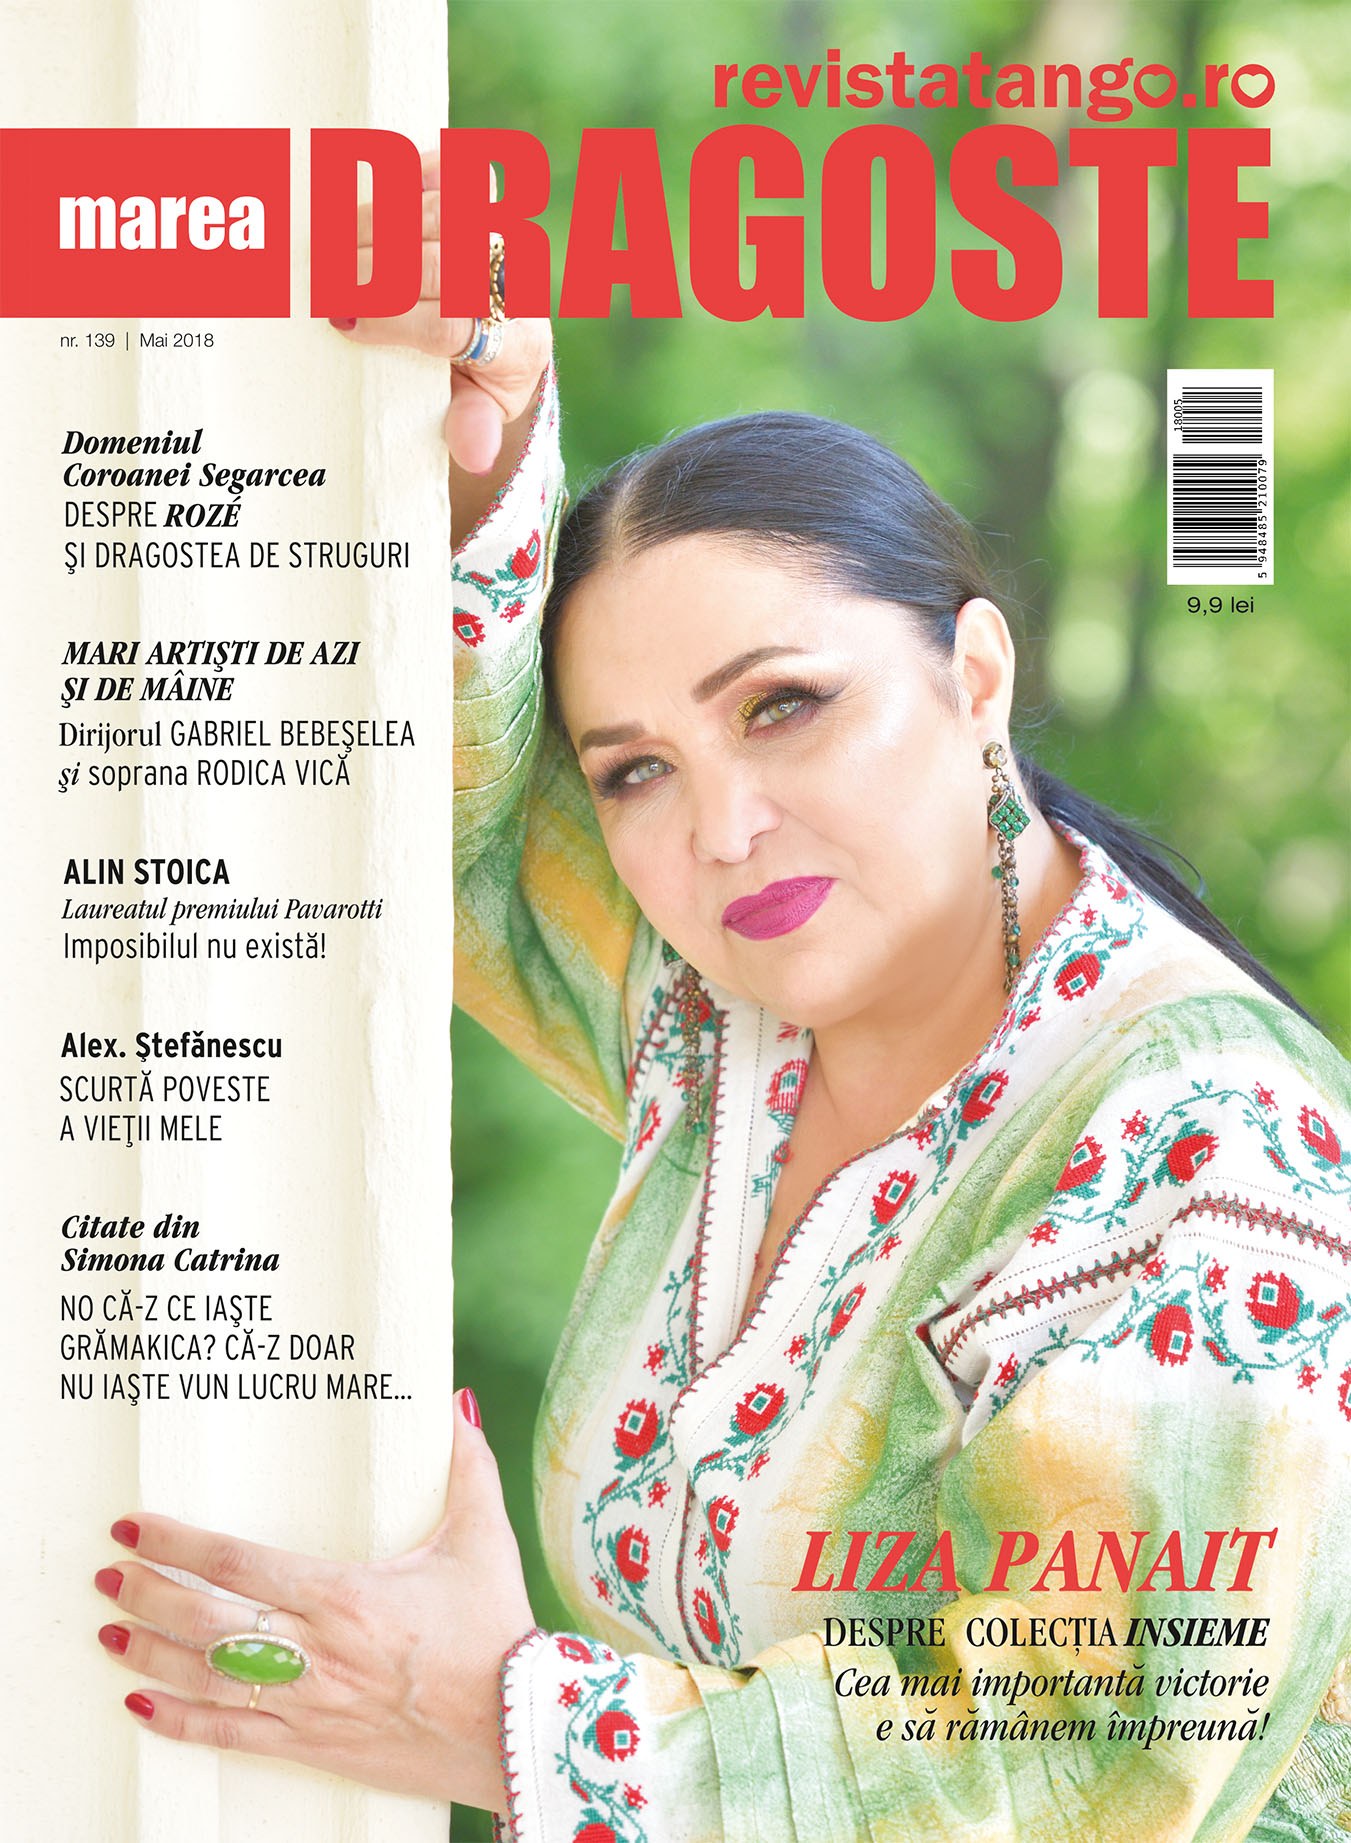 Liza Panait pe coperta Marea Dragoste-revistatango.ro, nr. 139, mai 2018